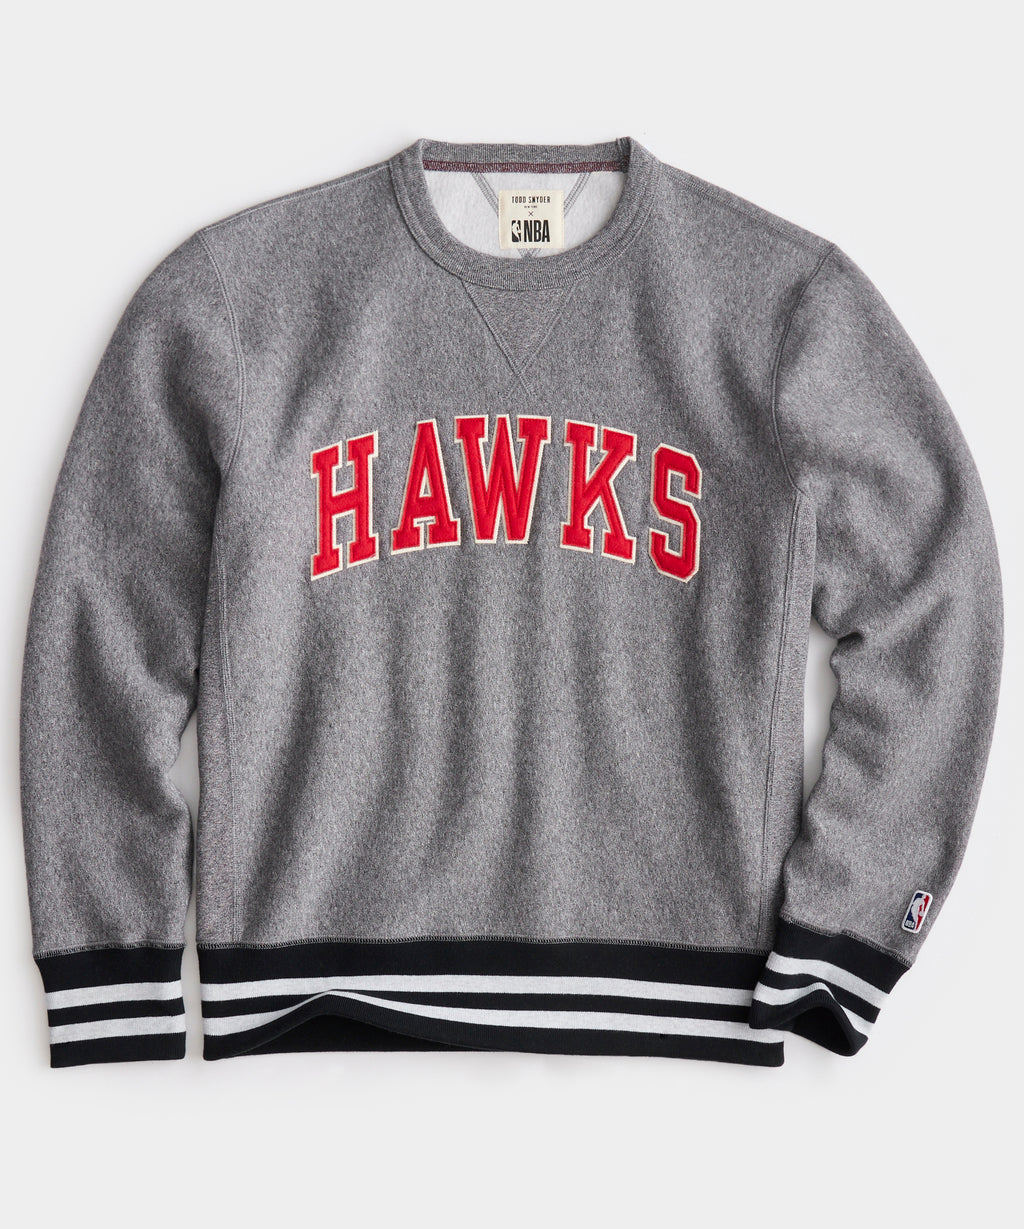 Todd Snyder x NBA Hawks Crewneck Sweatshirt